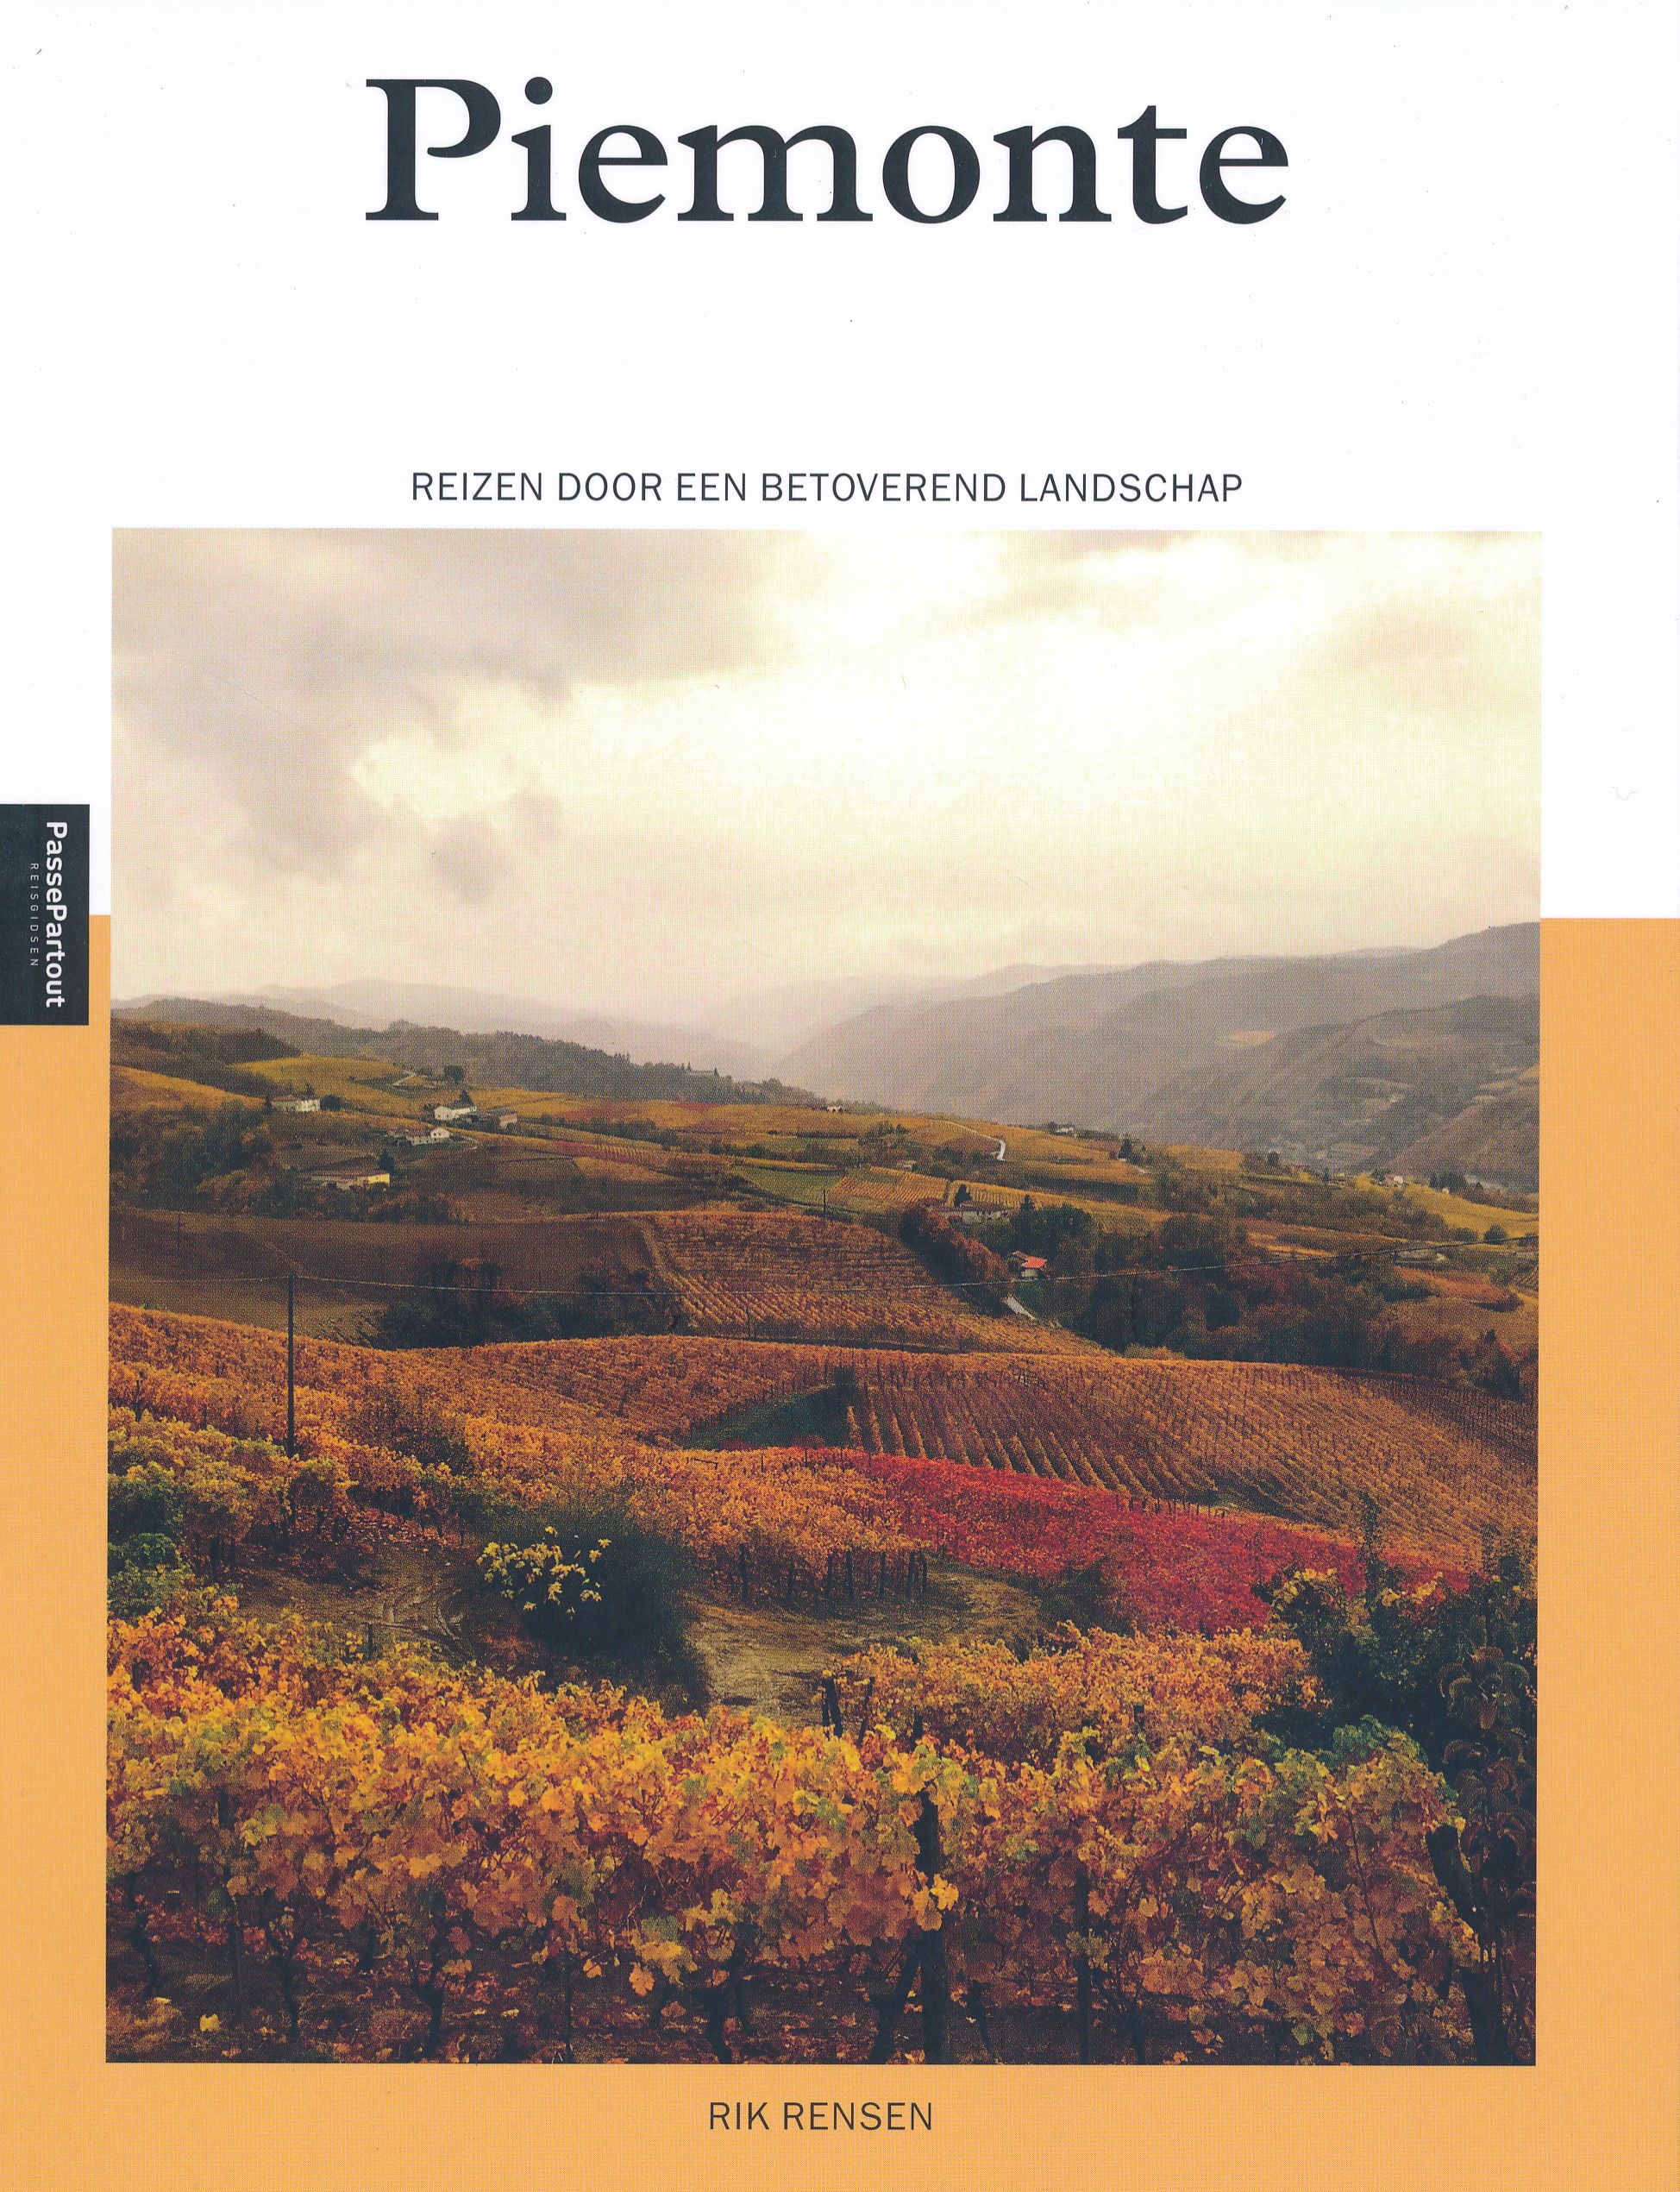 Online bestellen: Reisgids PassePartout Piemonte | Edicola